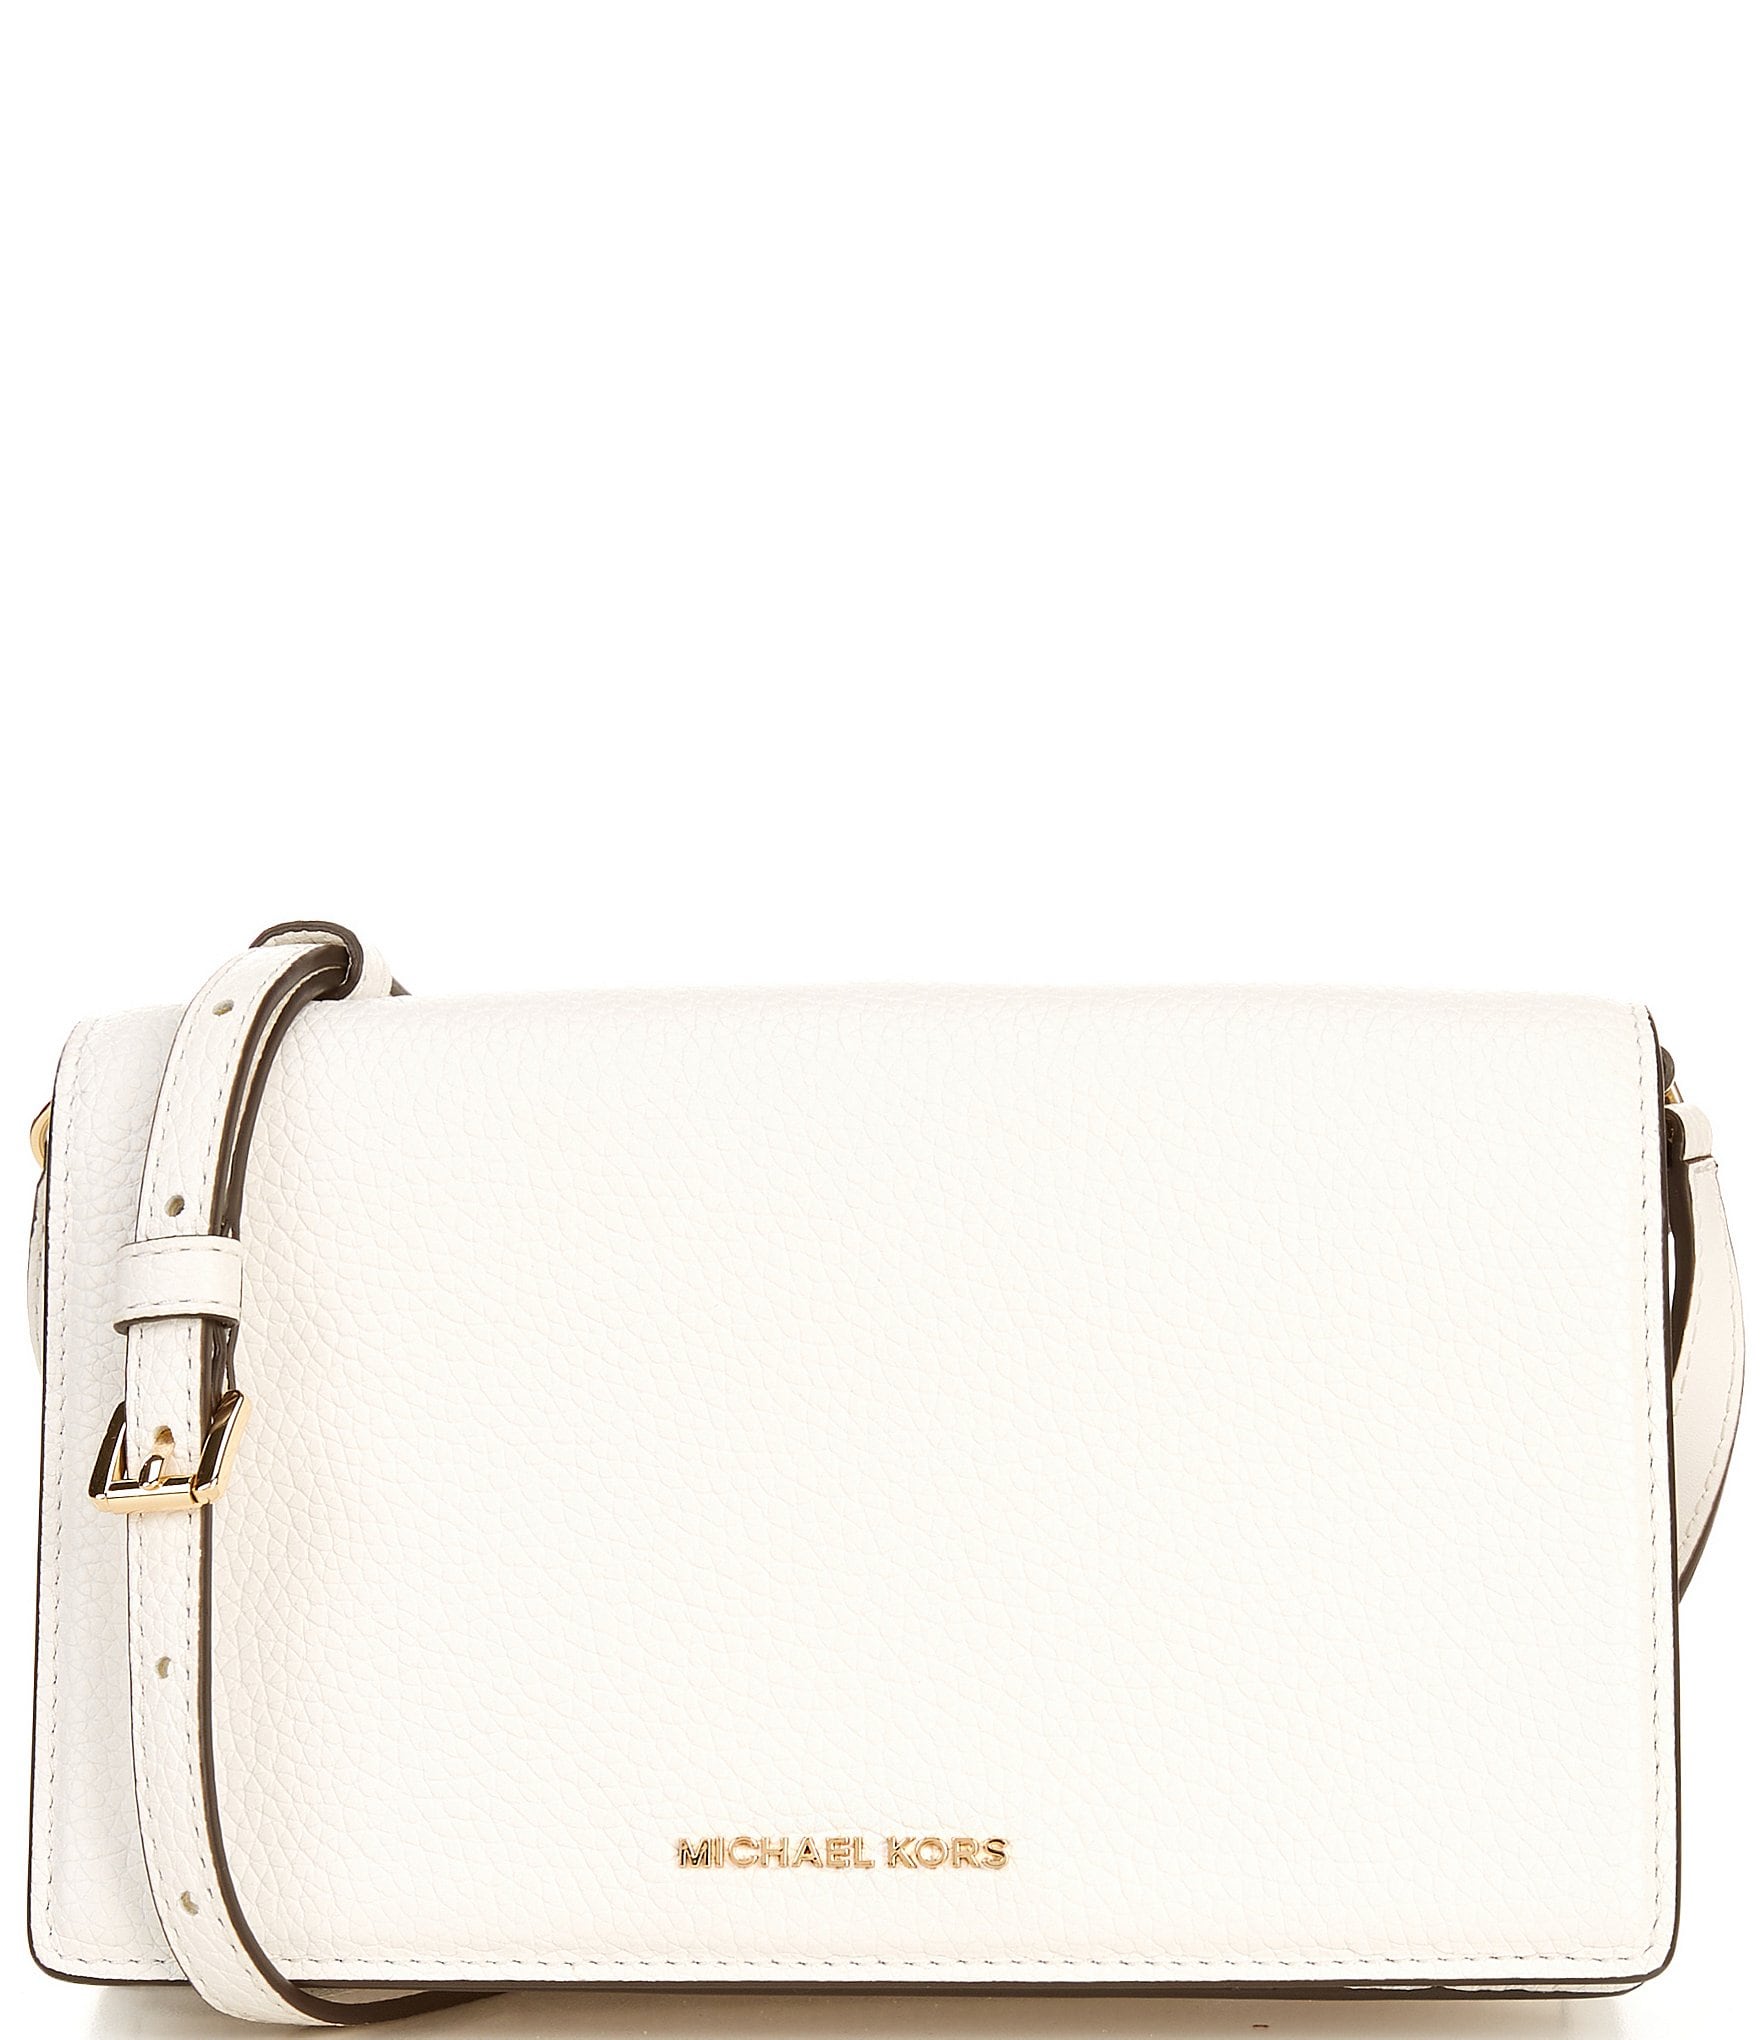 Michael Kors Off White Handbag | White handbag, Michael kors leather bag, Purses  michael kors